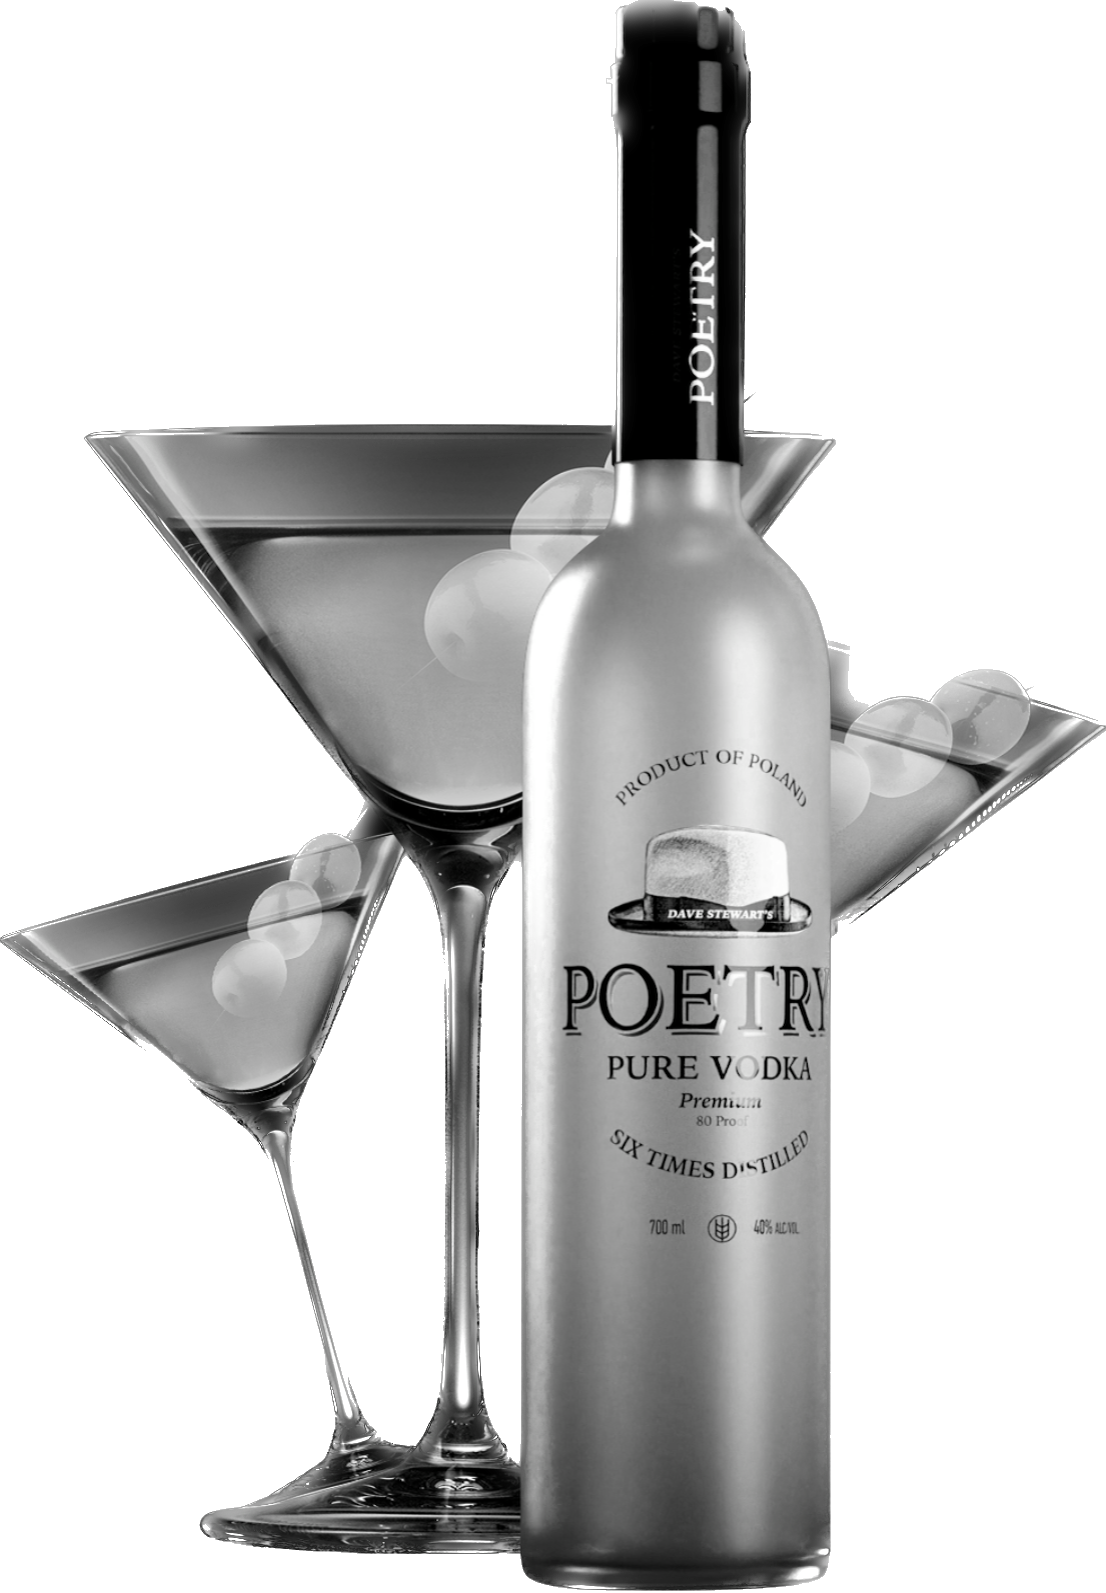 Poetry Premium Vodka 70cl